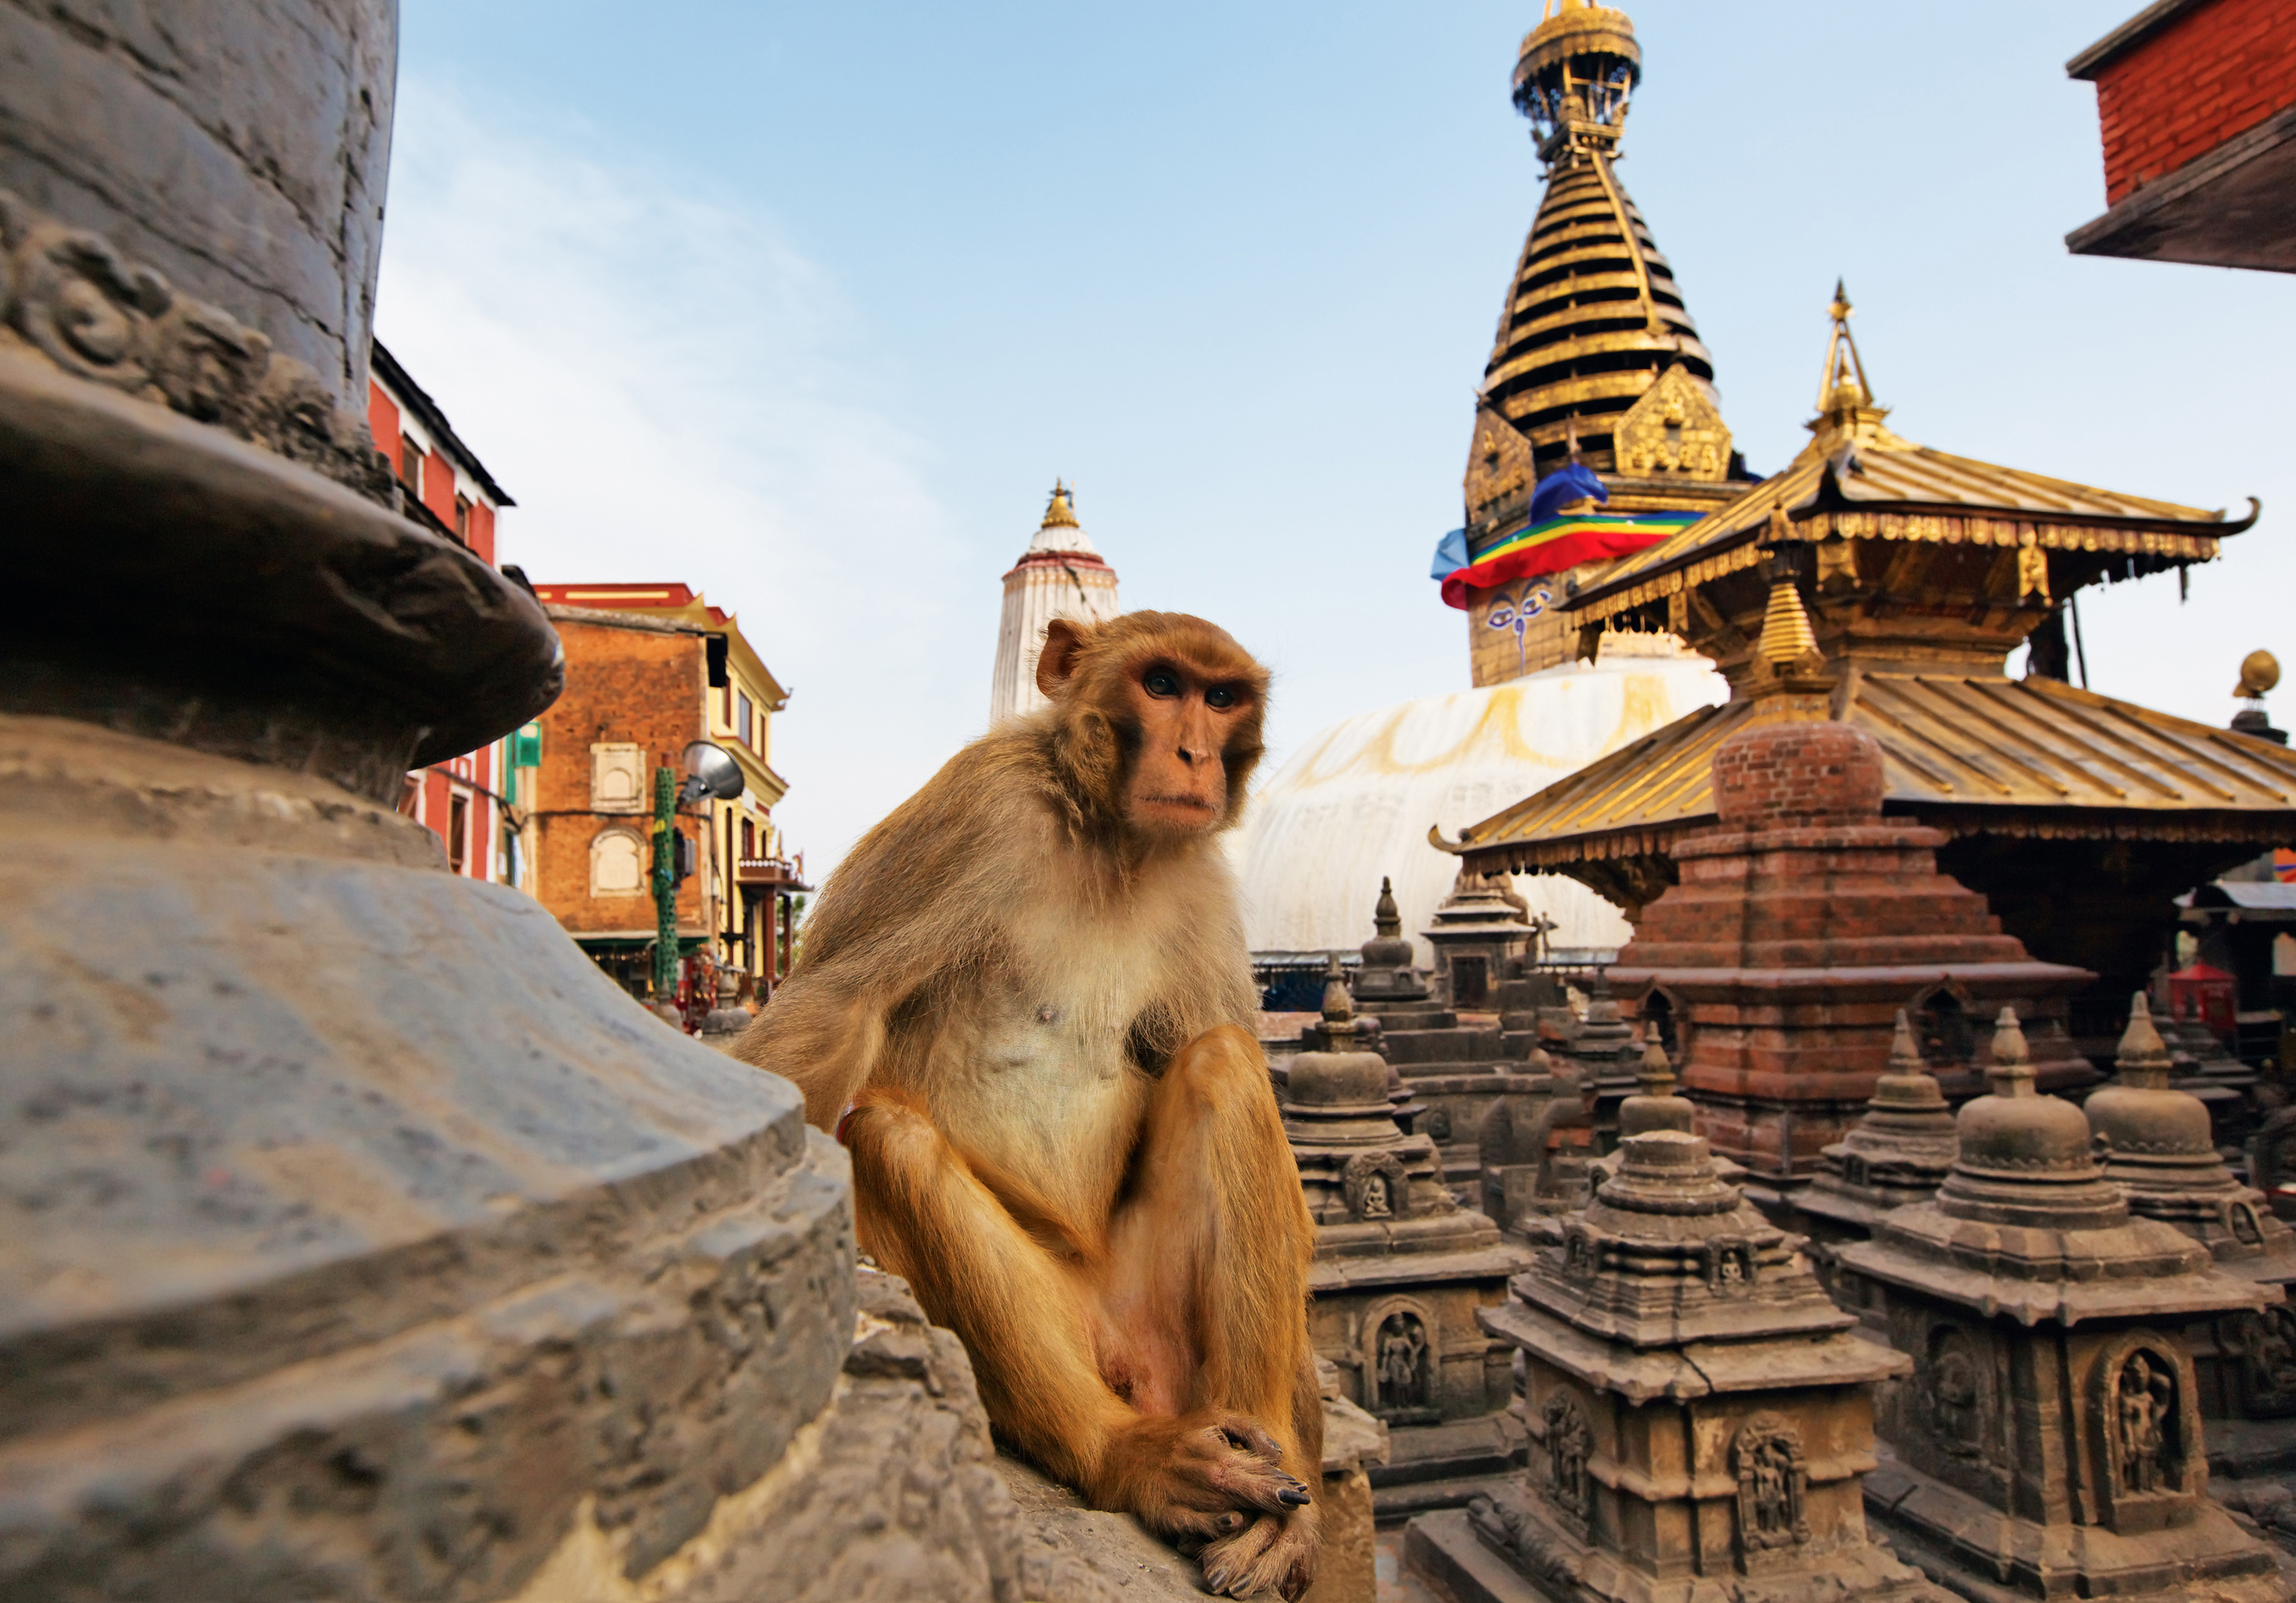 Sitting monkey on swayambhunath stupa in Kathmandu, Nepal (iStock)